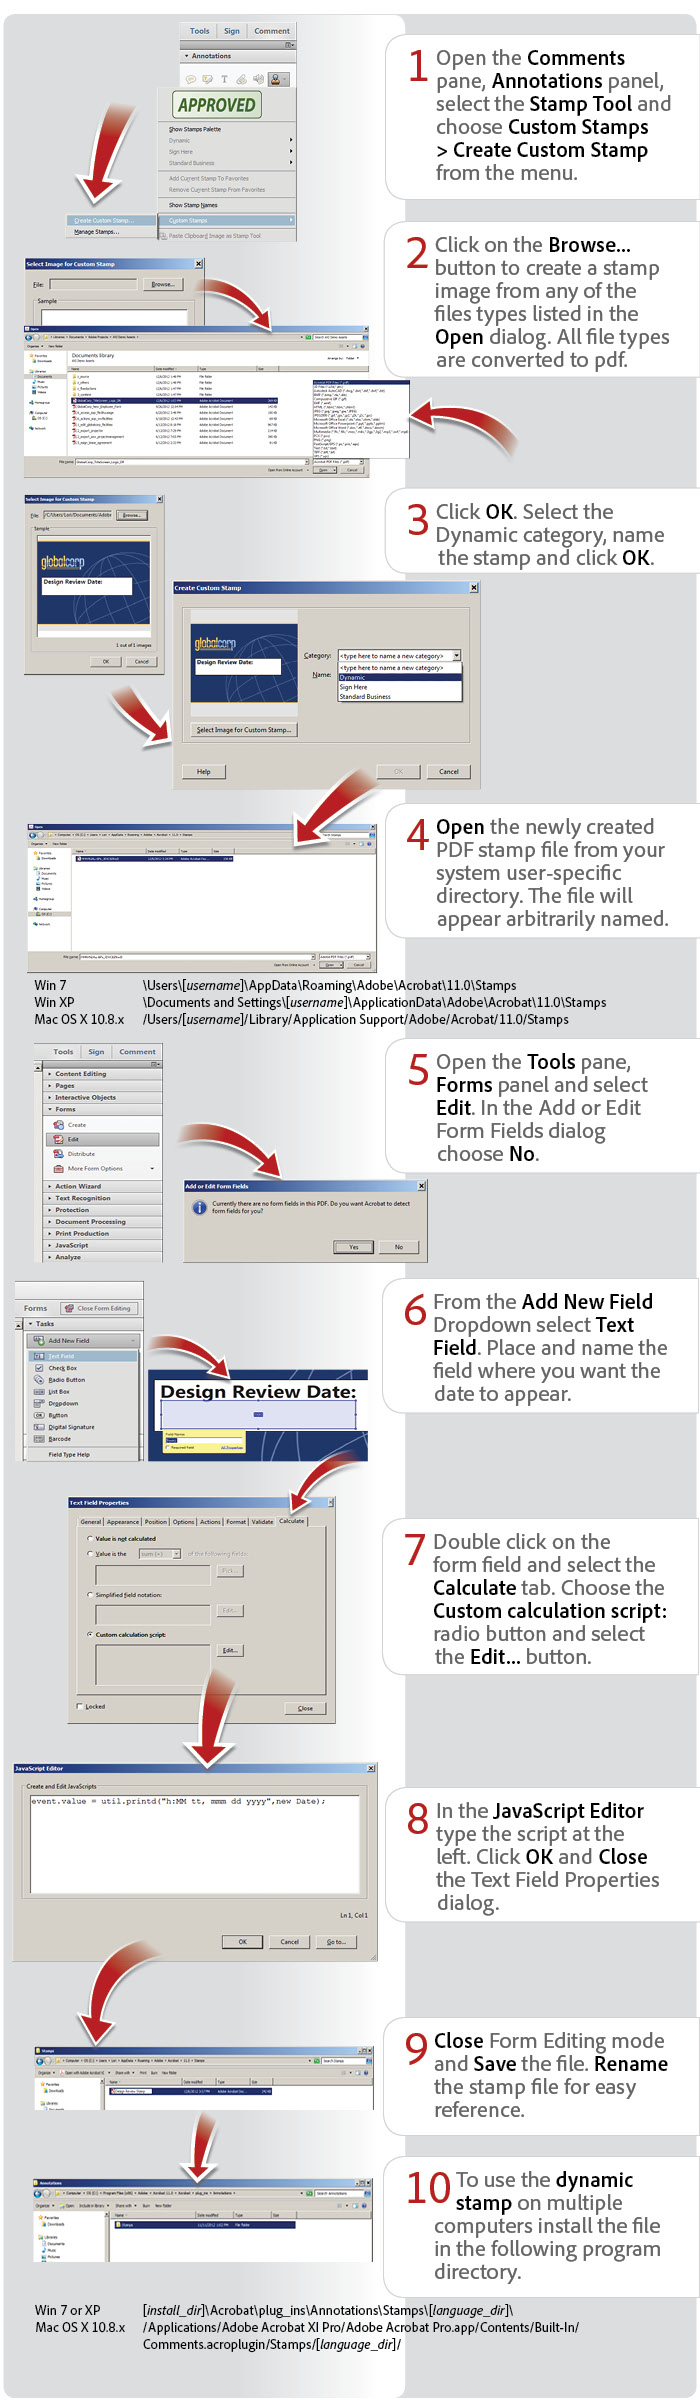 Adobe Dynamic Stamp Templates